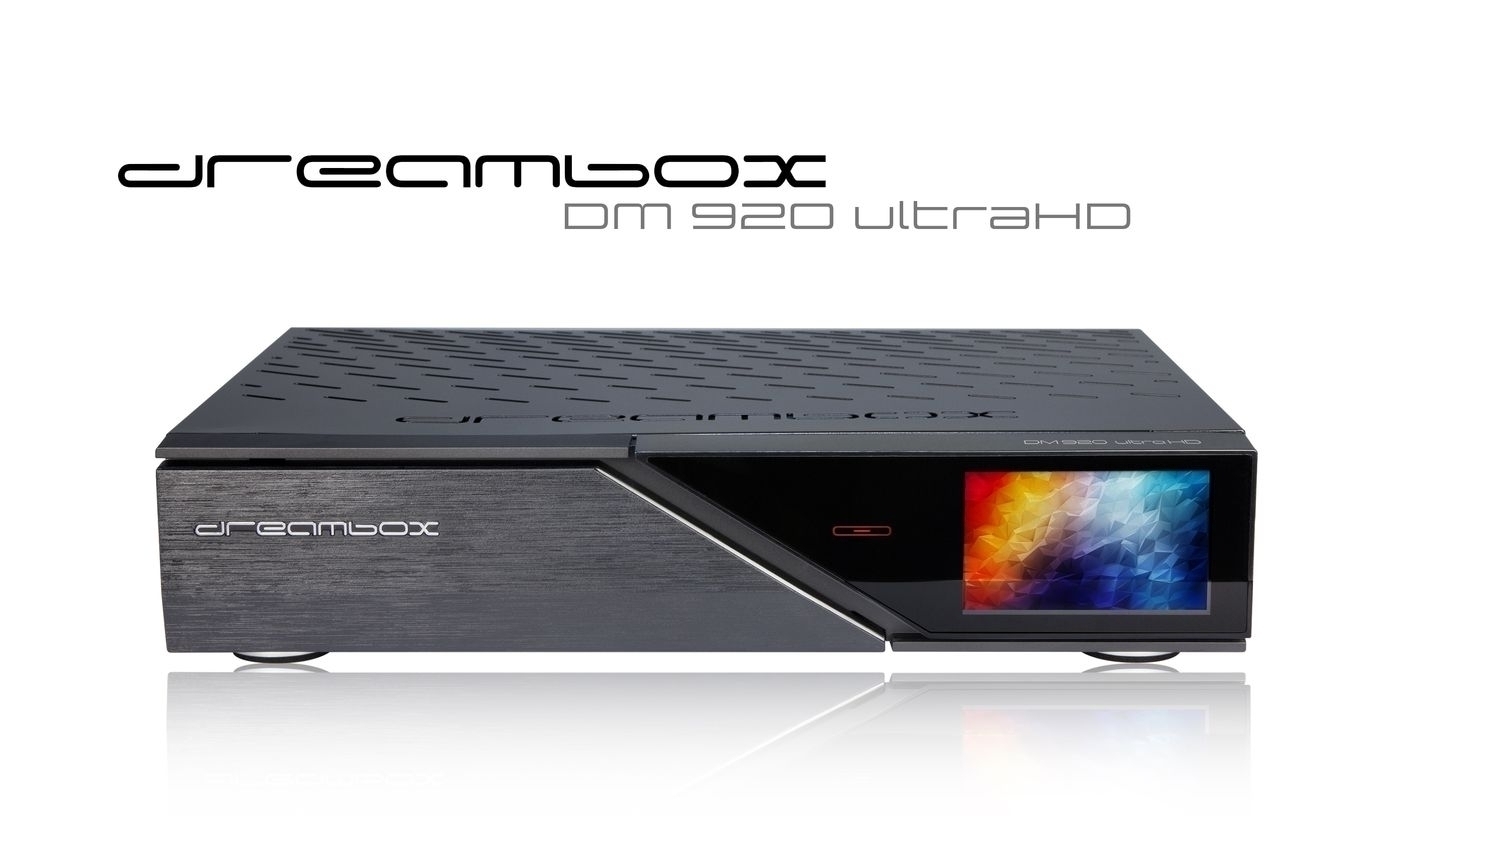 Dreambox DM920 UHD 4K 1x DVB-S2X FBC Multistream / 1x DVB-C/T2 Dual Tuner E2 Linux PVR Receiver